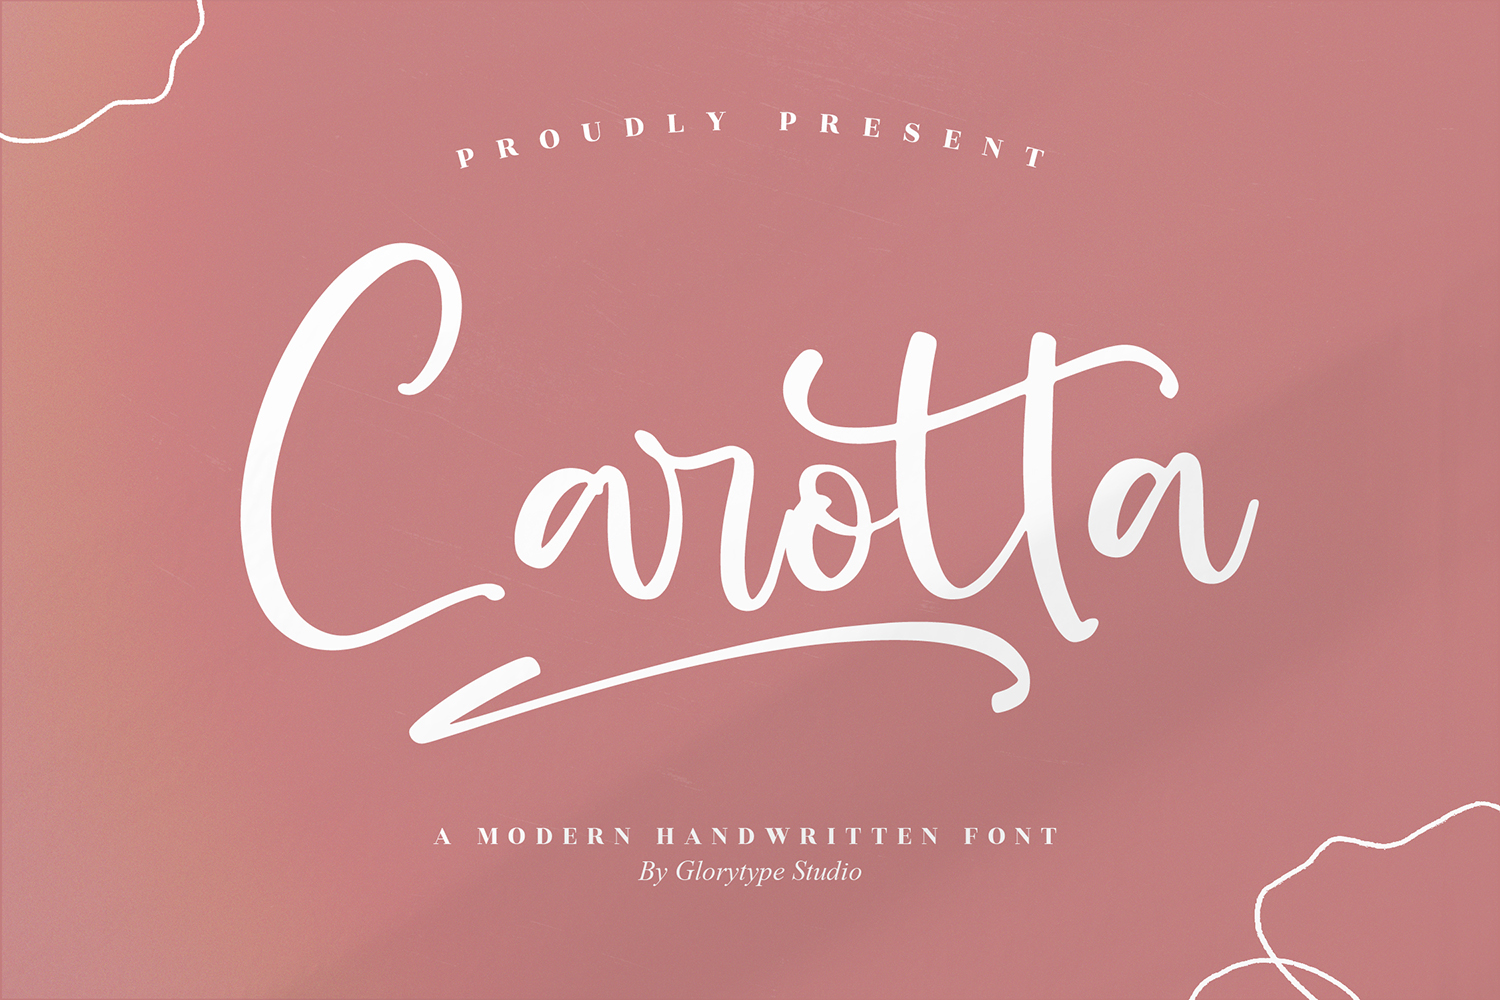 Carotta Free Font